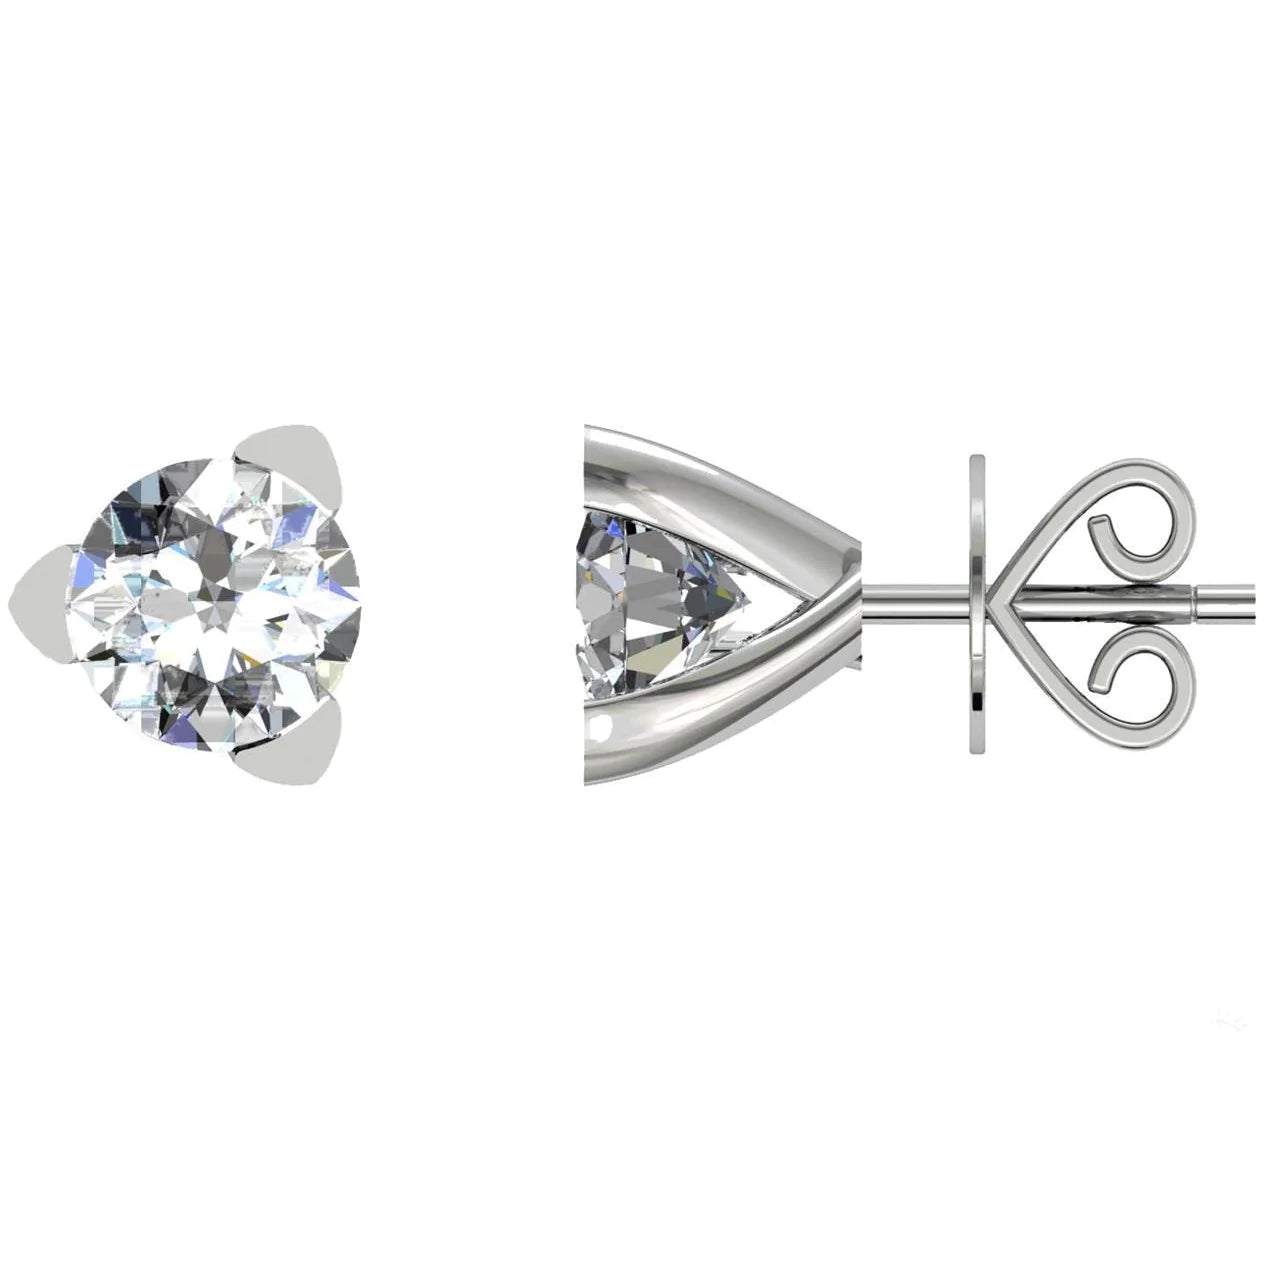 White Gold 14K Round Cut 2.50 Ct Genuine Diamonds Studs Earrings